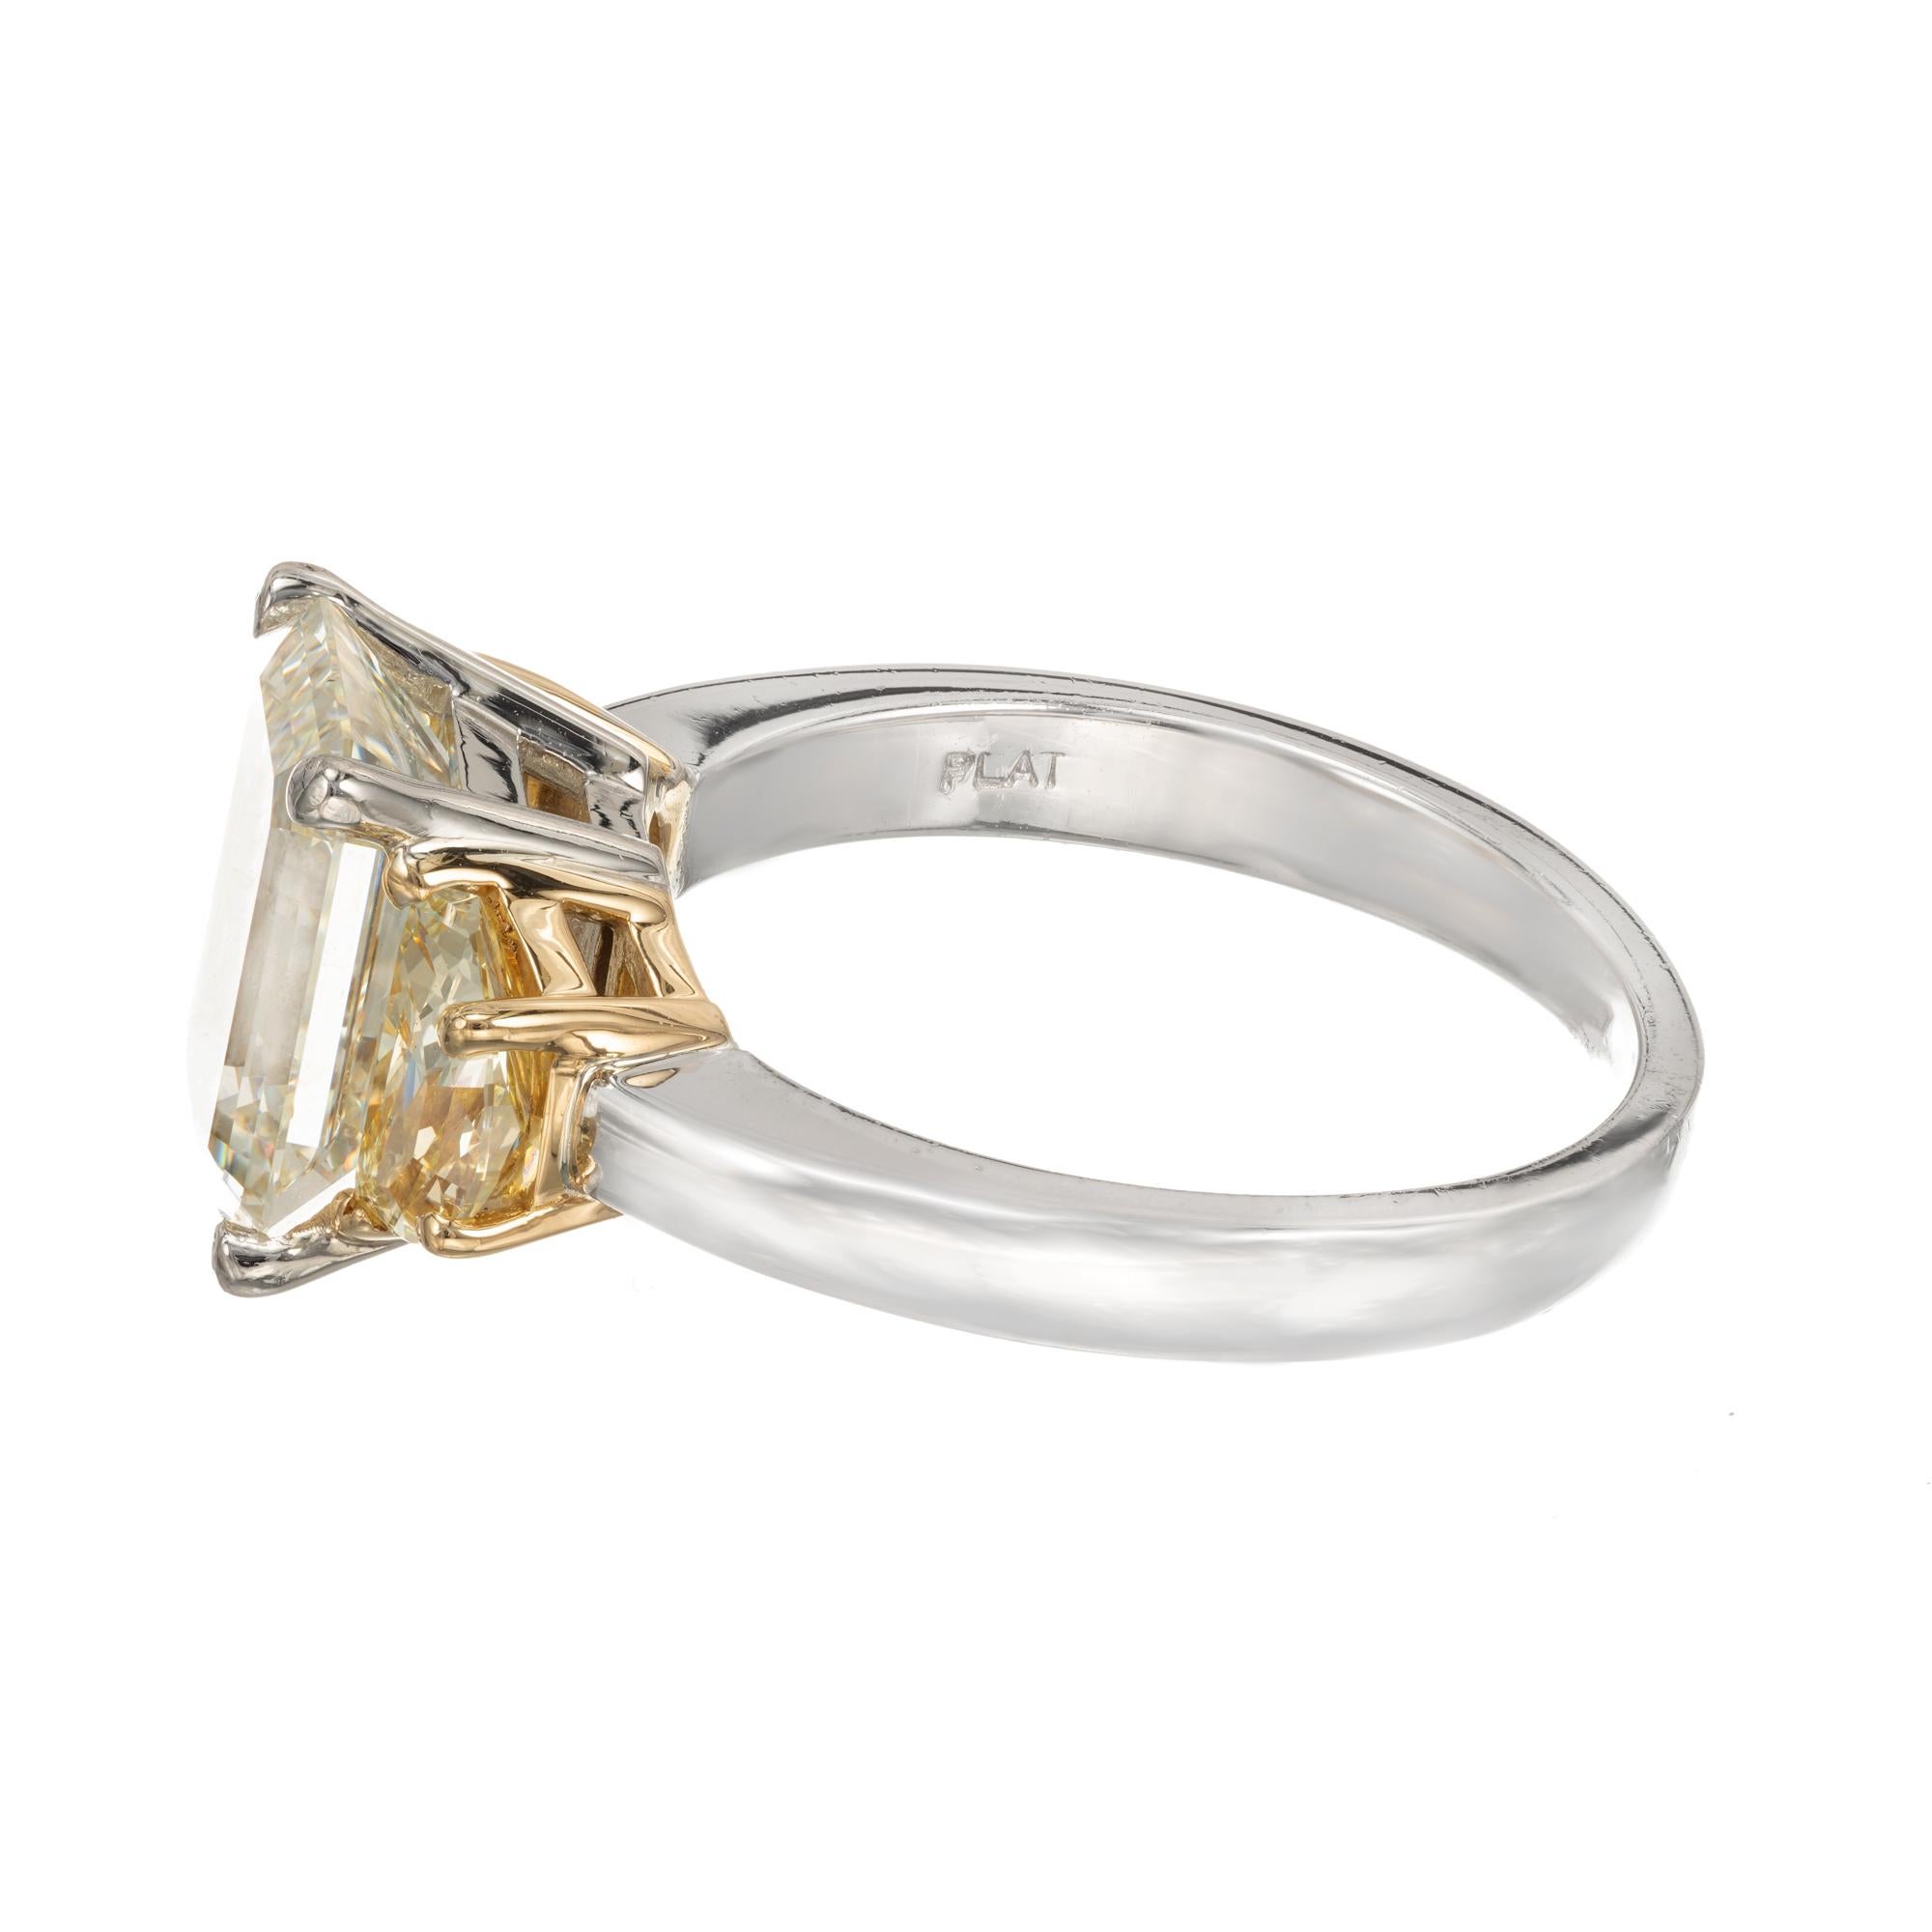 Peter Suchy 4.18 Carat Emerald Cut Diamond Platinum Engagement Ring 4